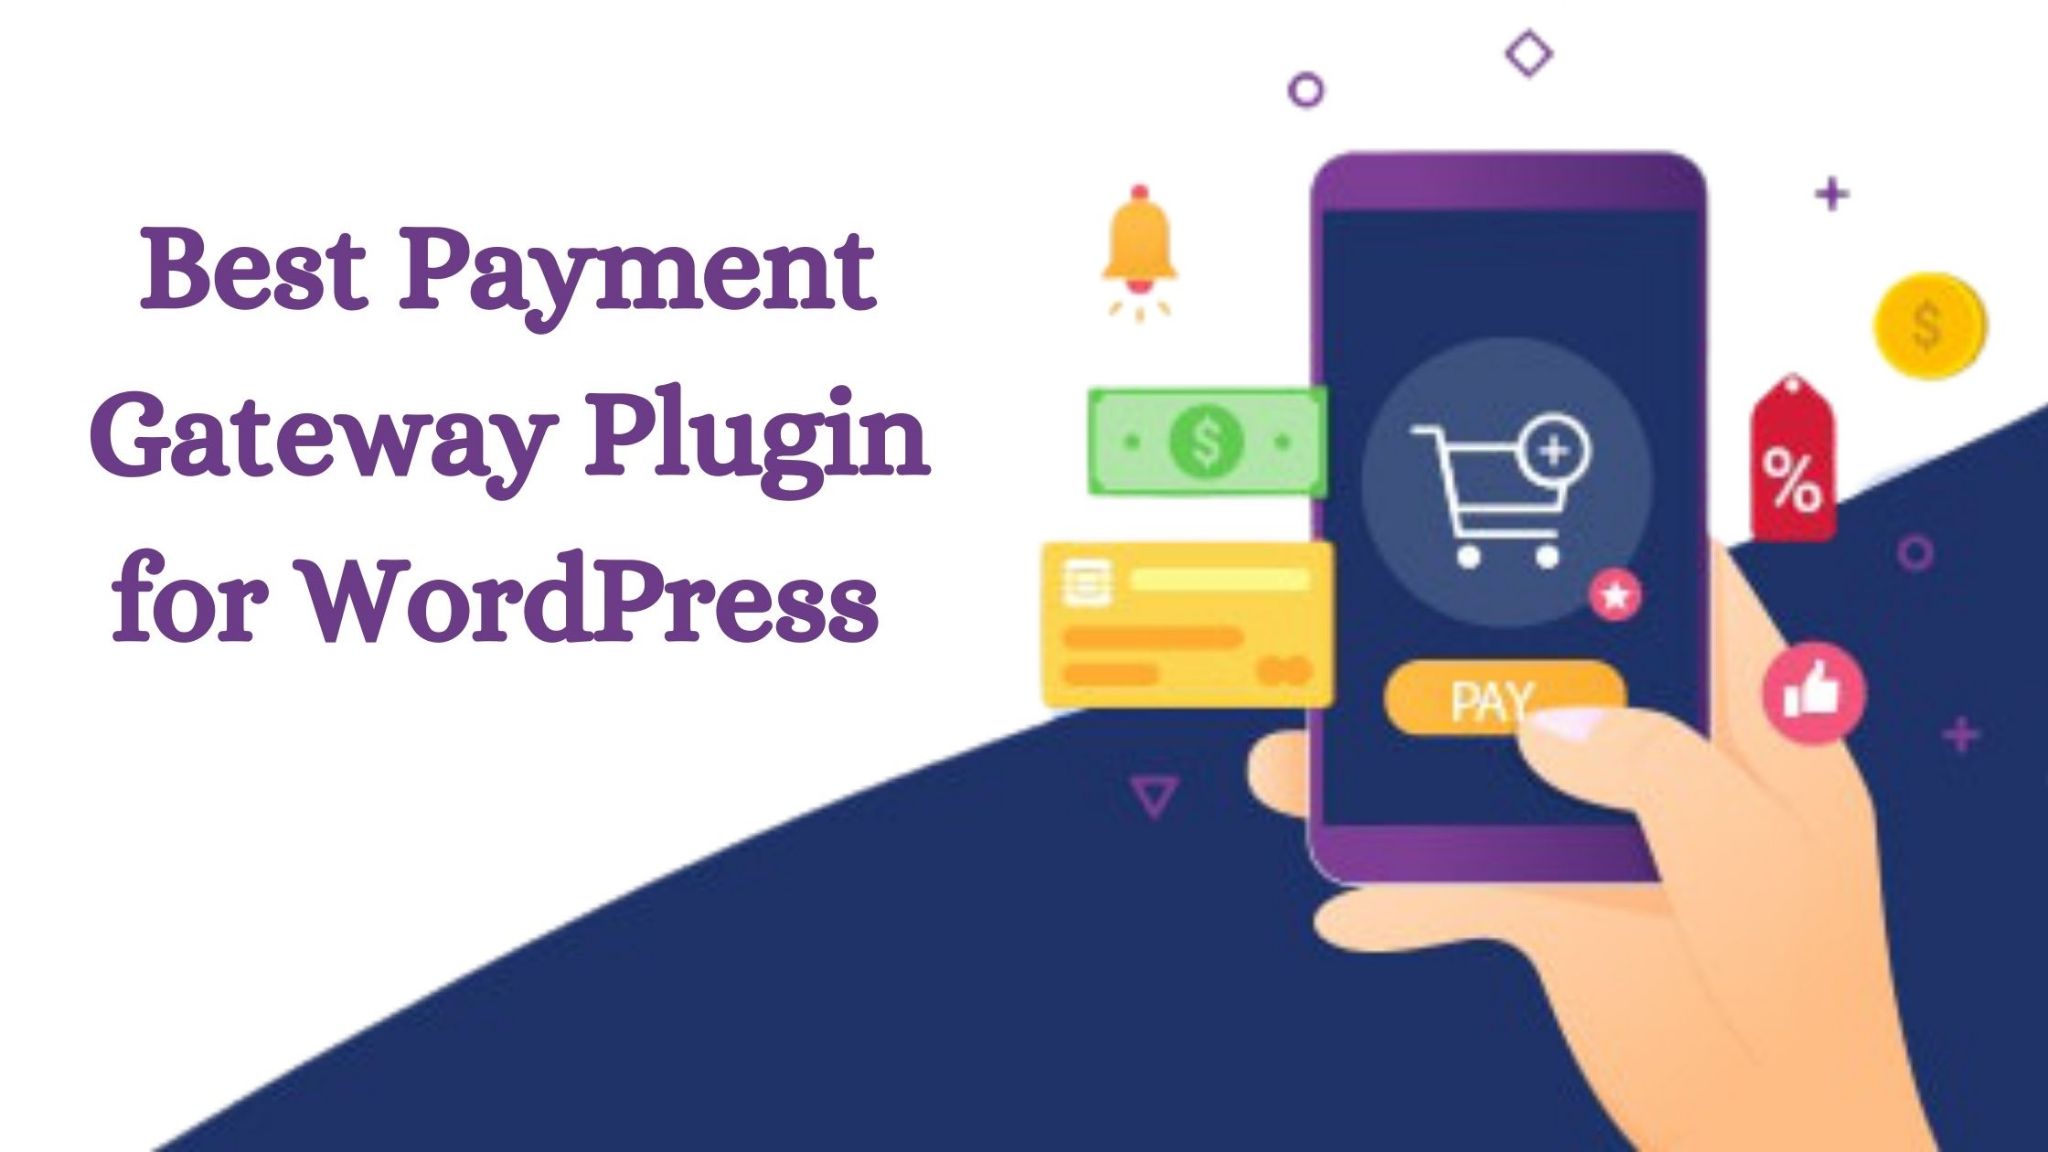 Best Payment Gateway Plugin for WordPress 2021